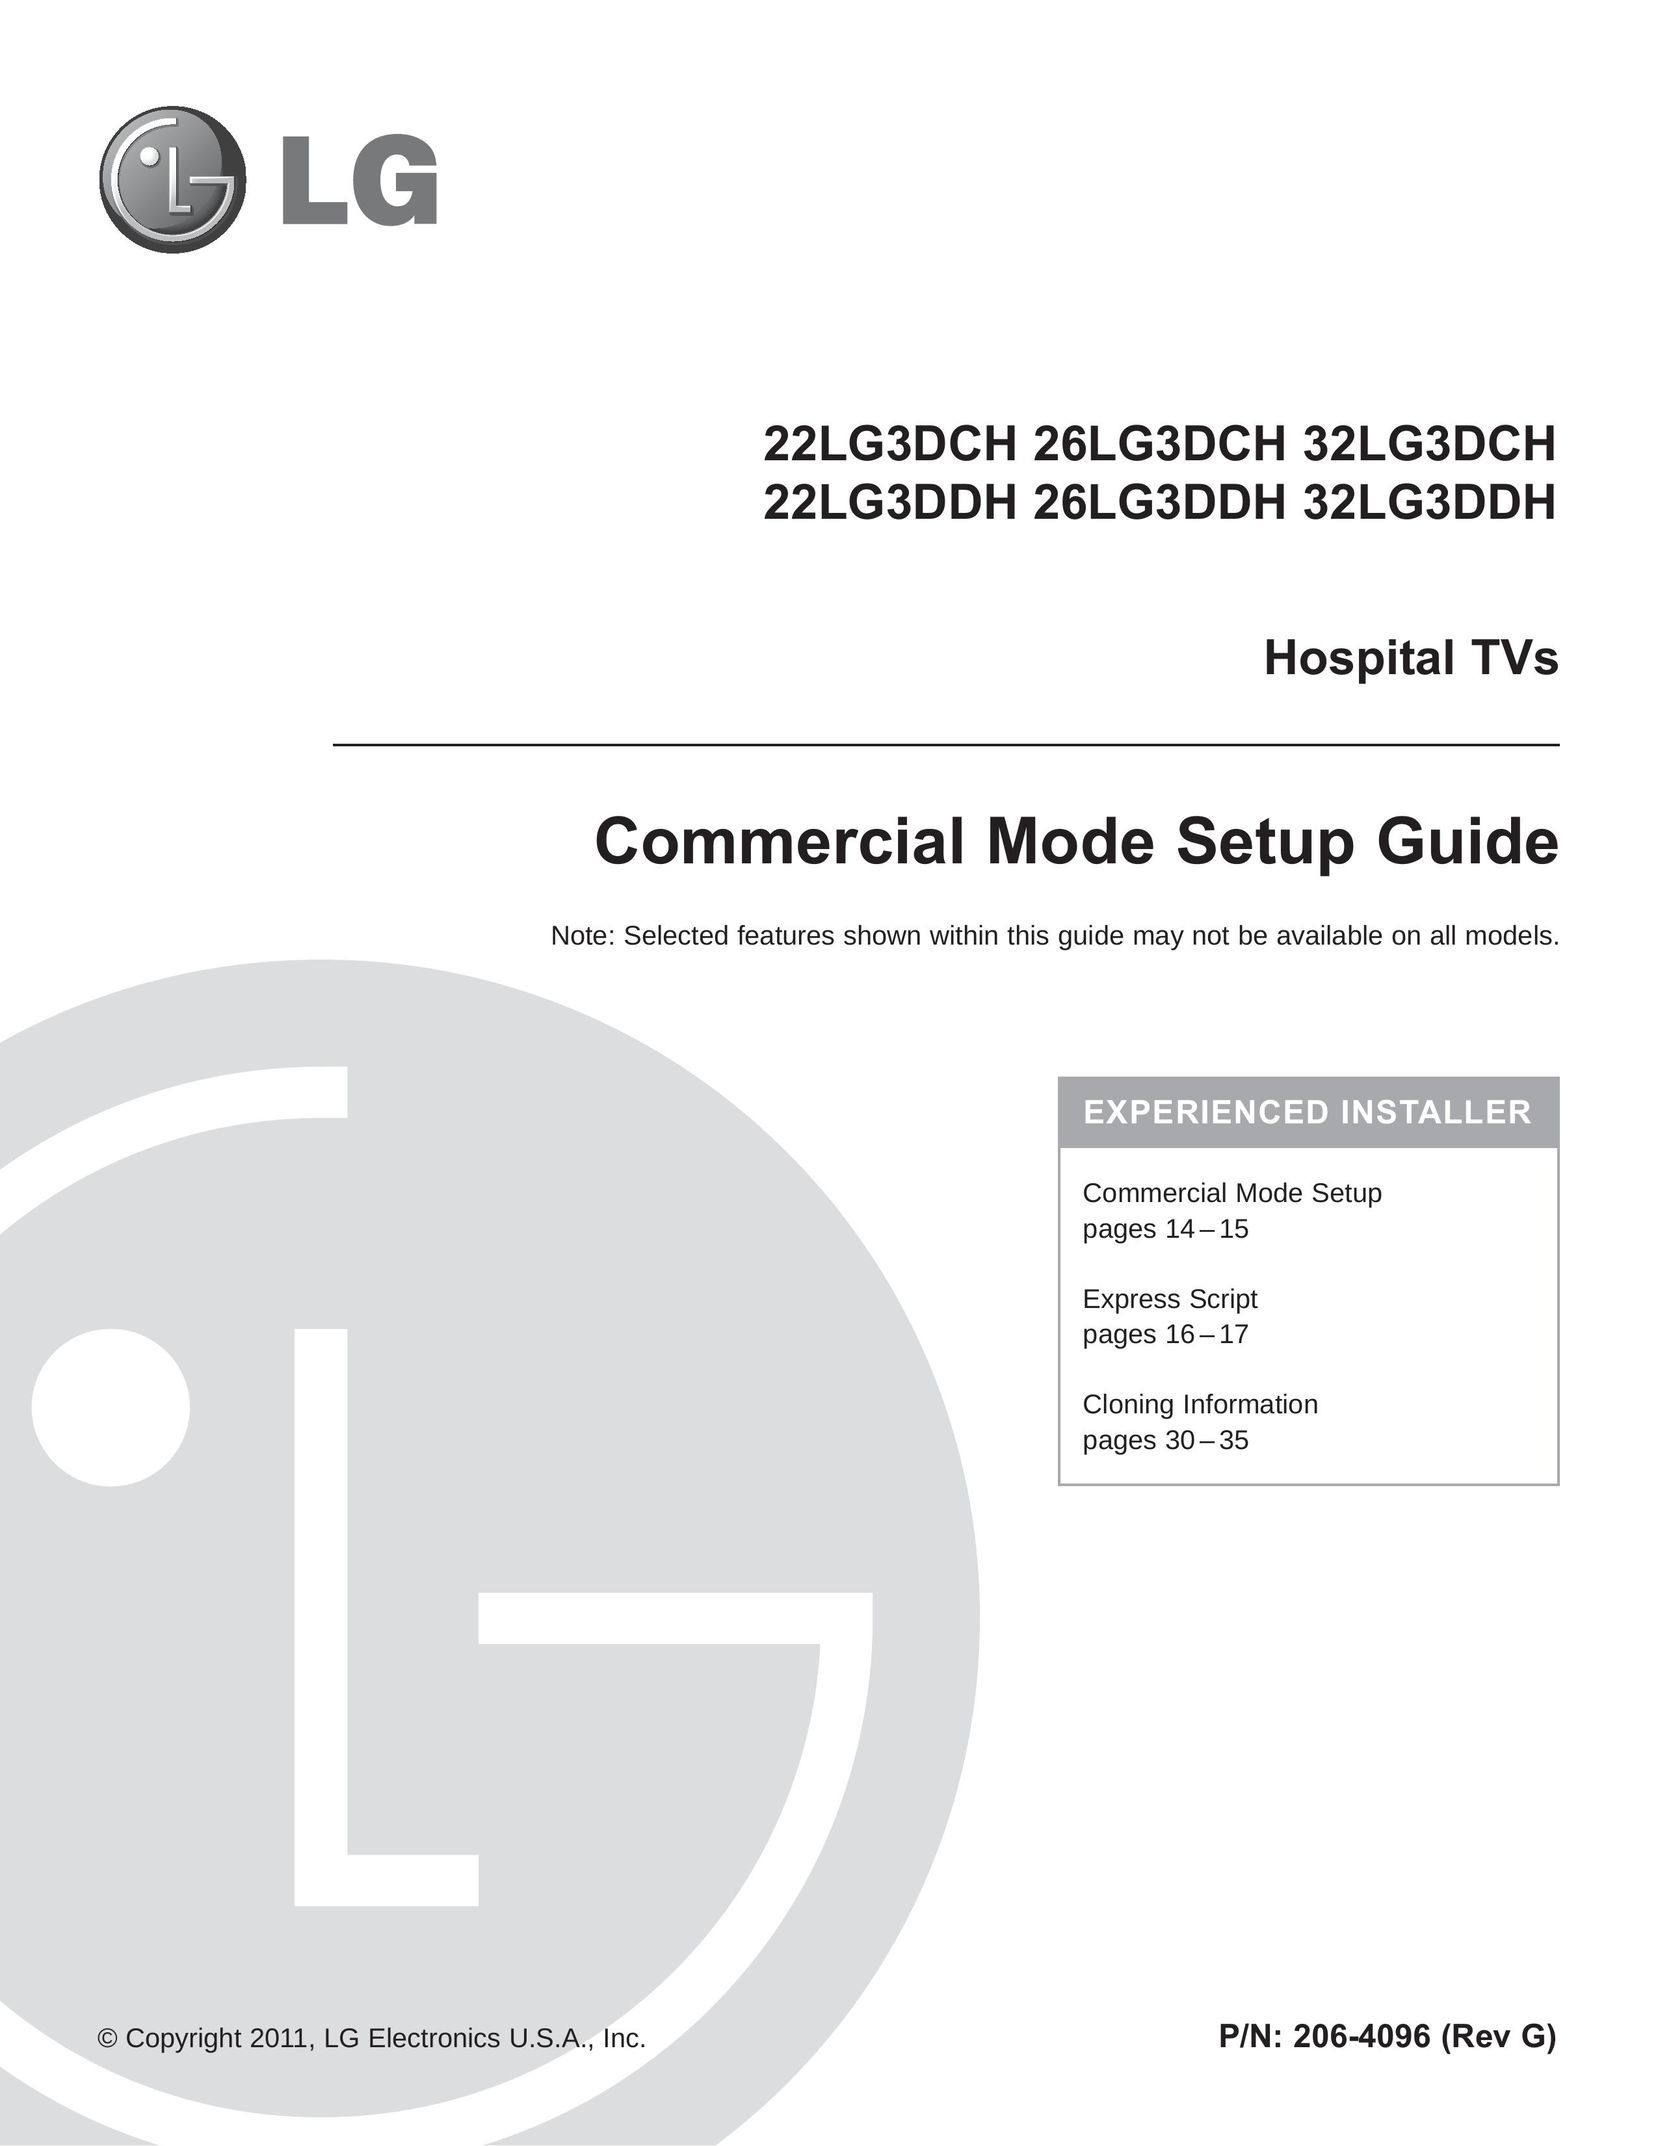 LG Electronics 26LG3DDH CRT Television User Manual